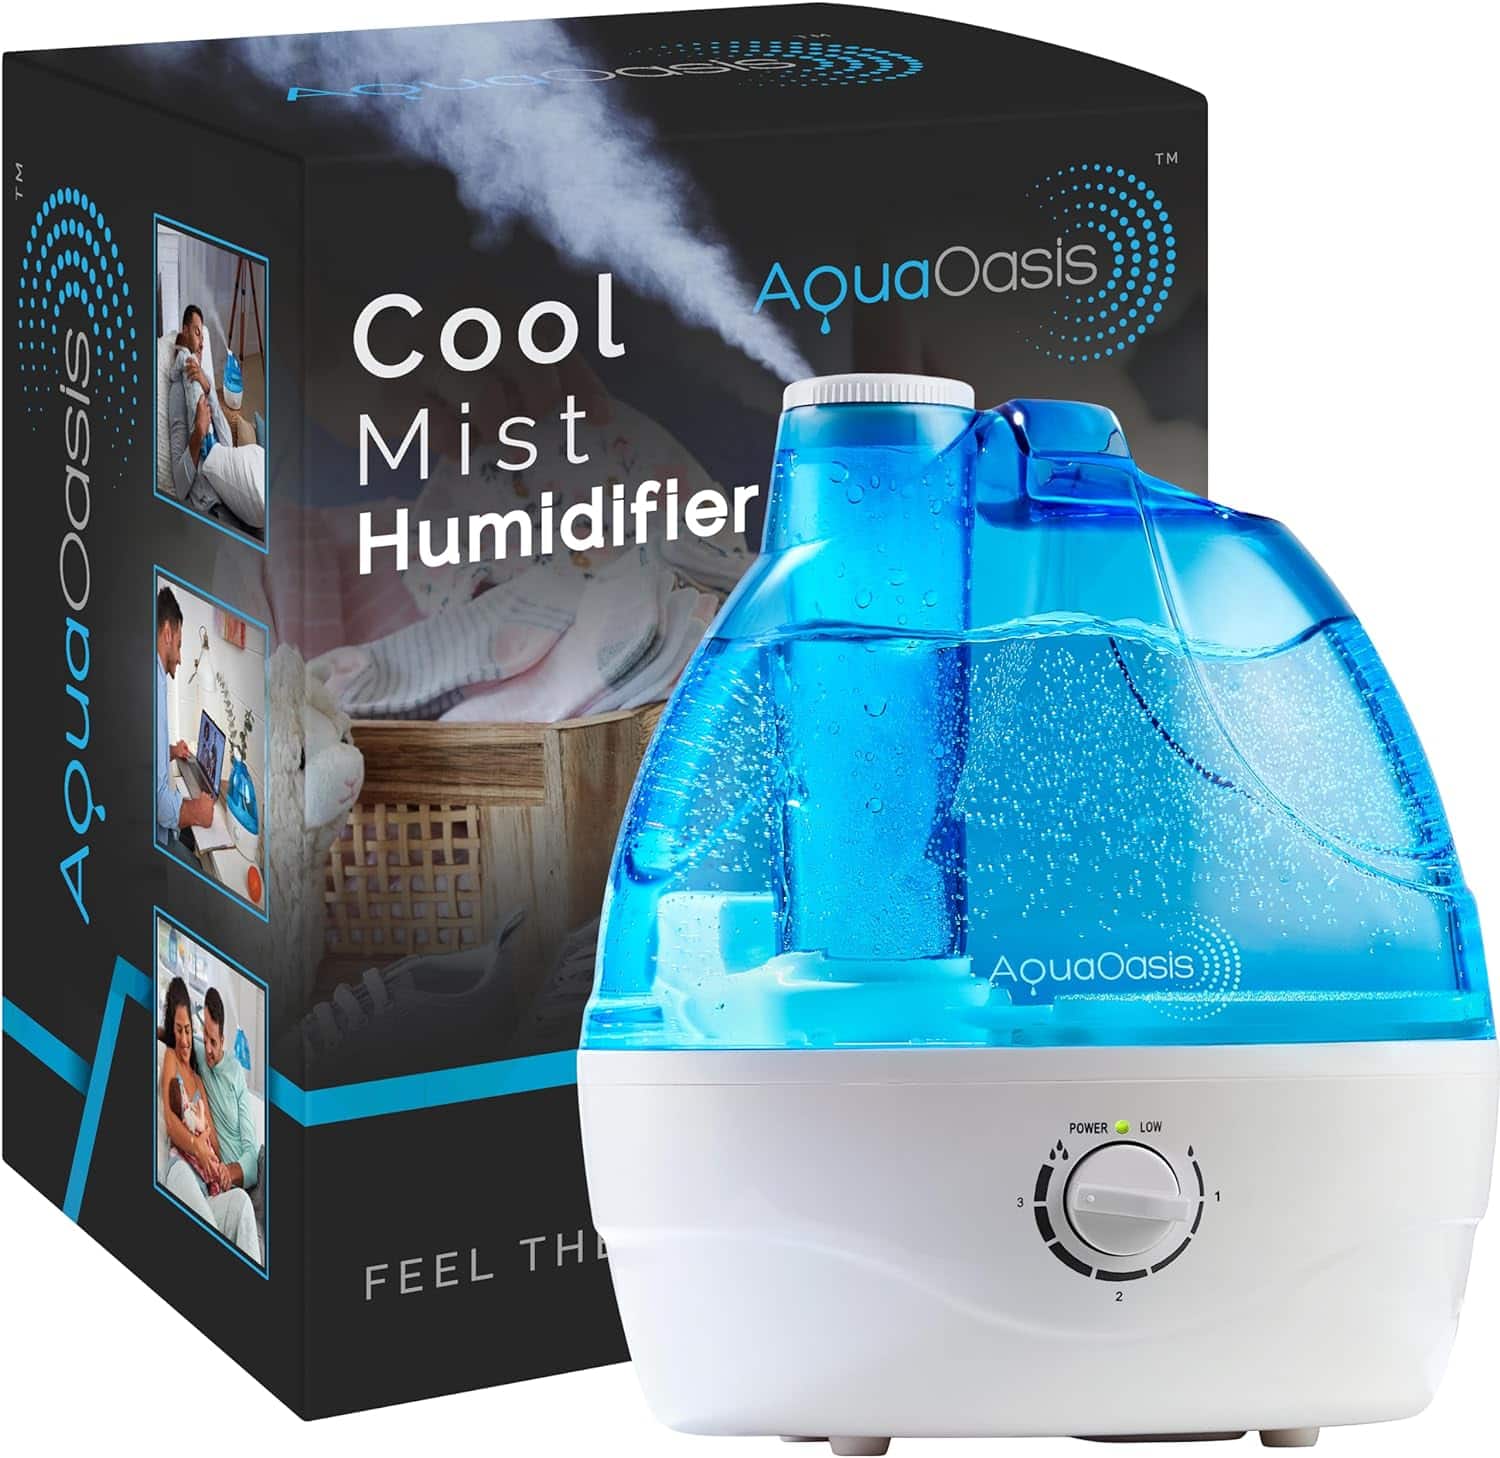 AquaOasis cool mist humidifer